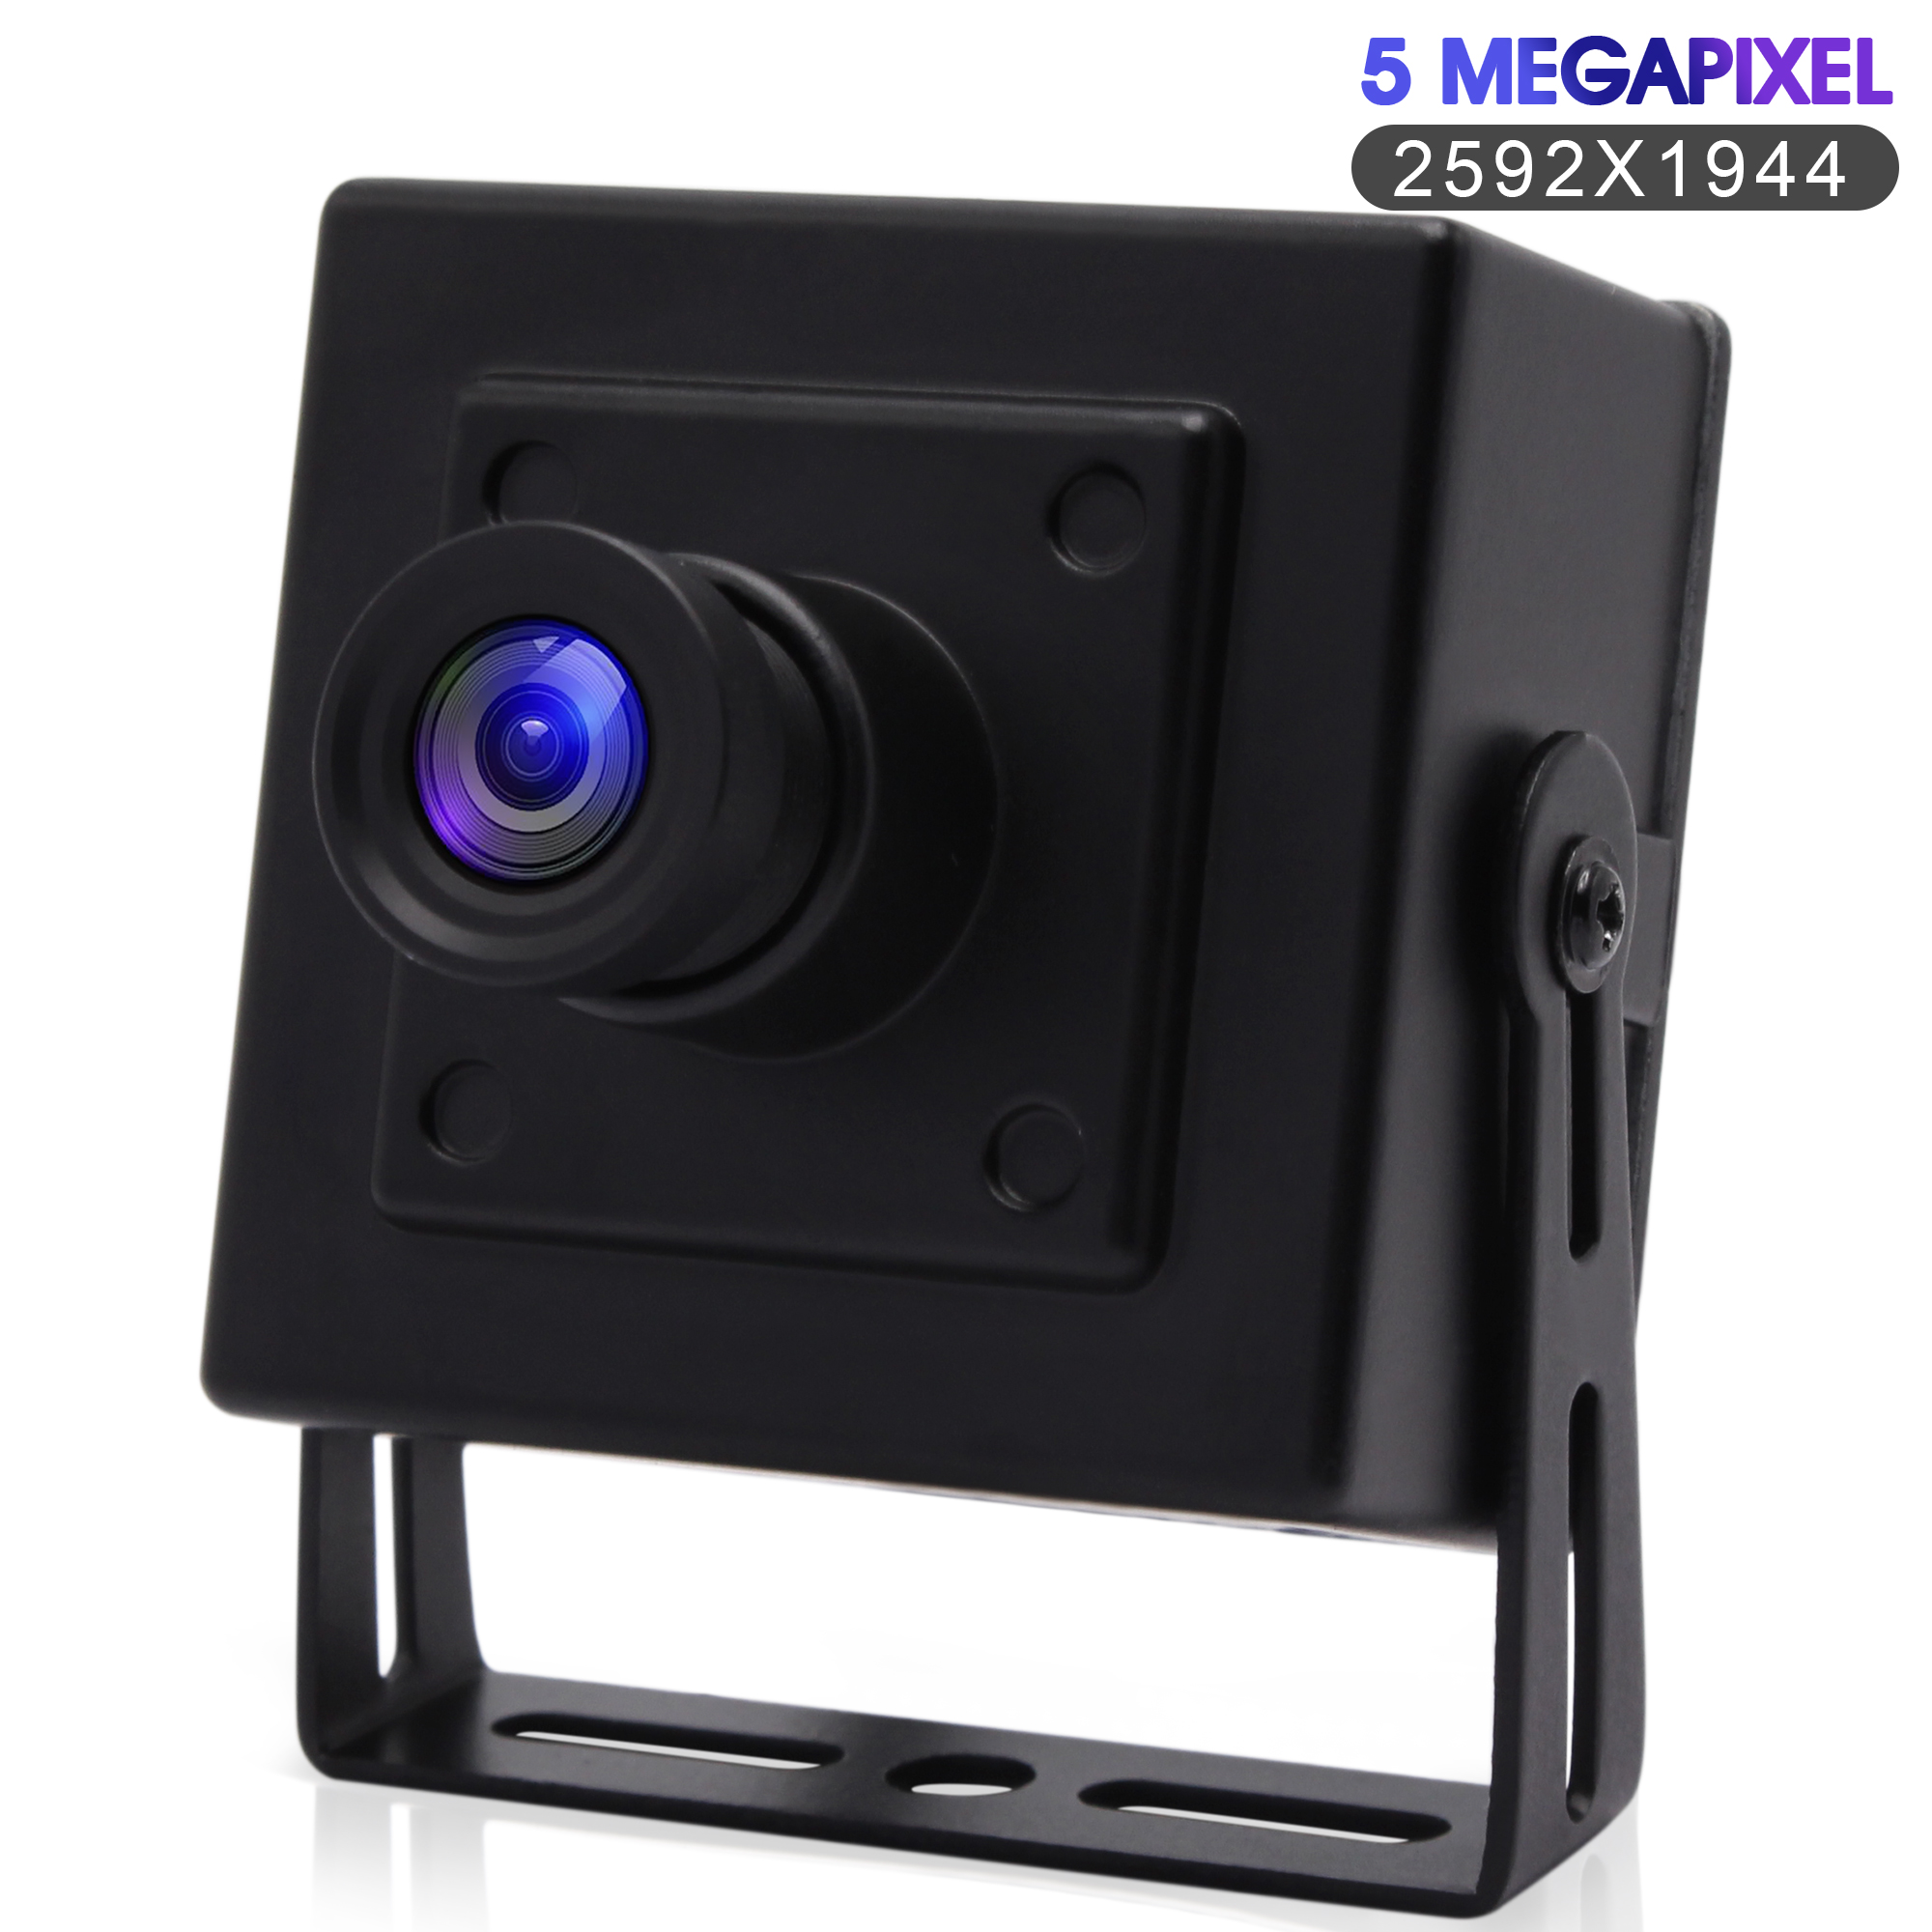 ELP 5MP USB Camera White Balance/Exposure Adjustable Aptina MI5100 Sensor Drone ATM Webcam USB2.0 Interface Plug Play Camera Module